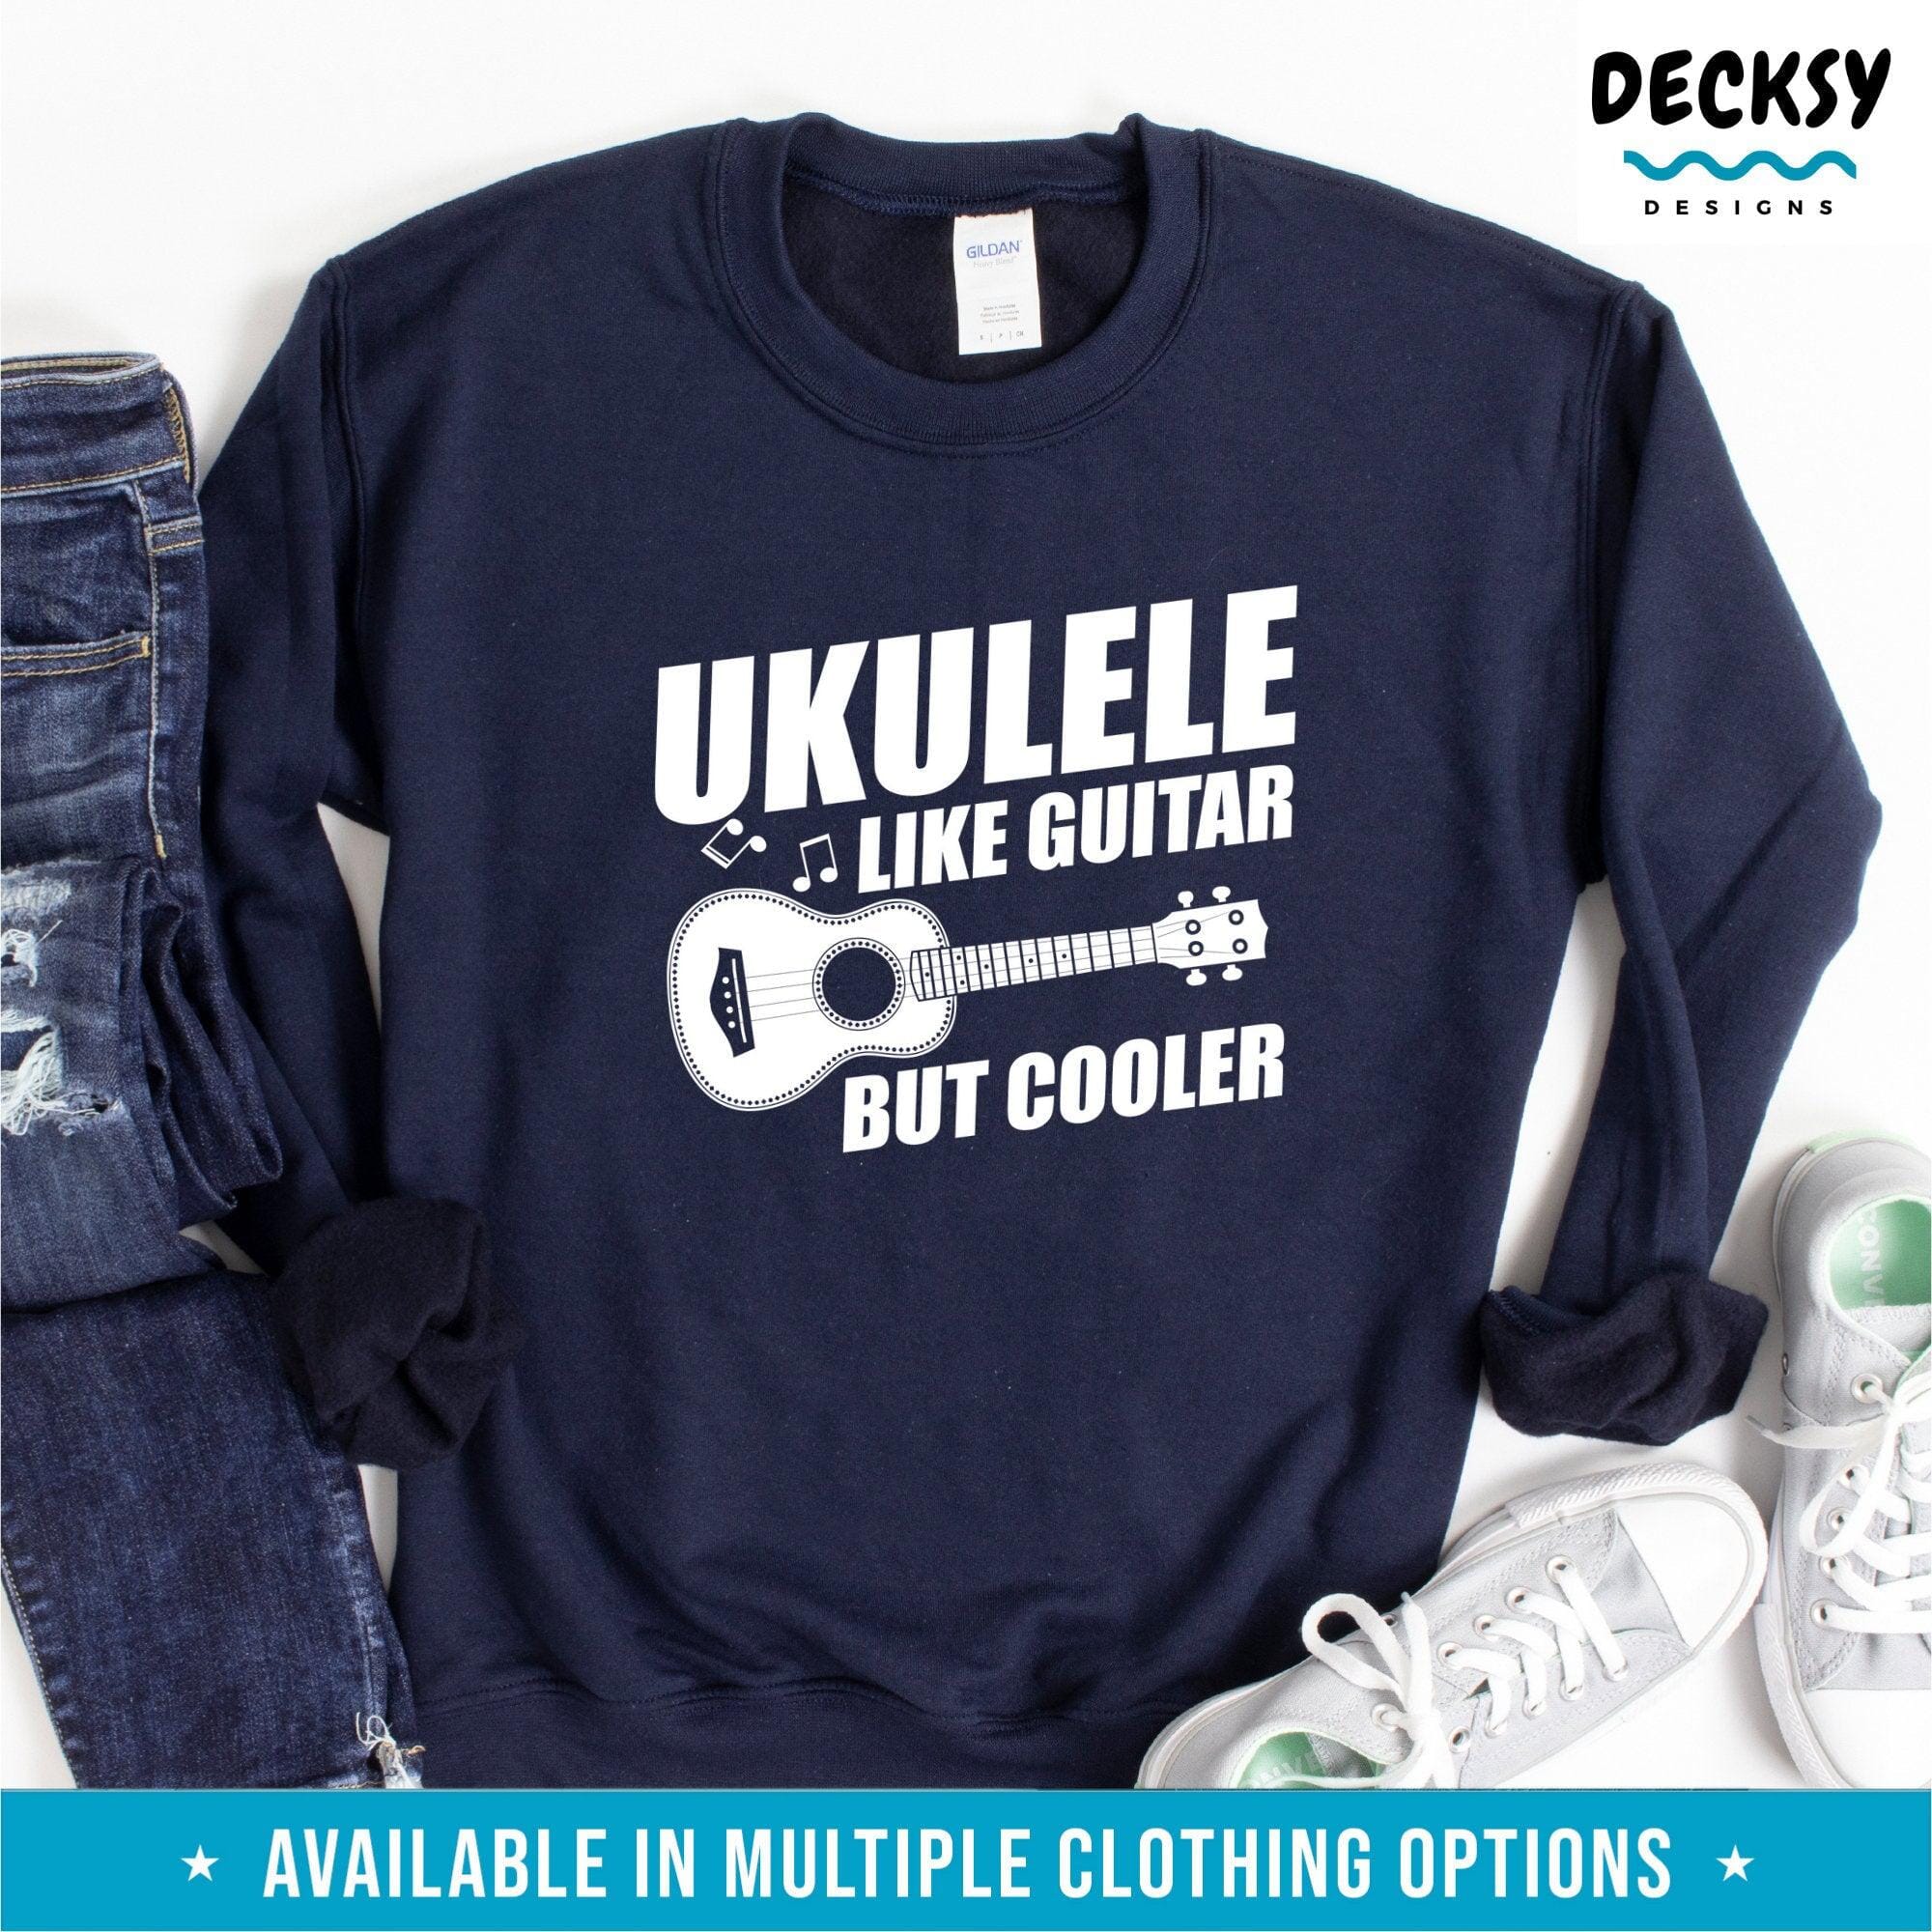 Funny Ukulele Tshirt, Ukulele Player Gift-Clothing:Gender-Neutral Adult Clothing:Tops & Tees:T-shirts:Graphic Tees-DecksyDesigns